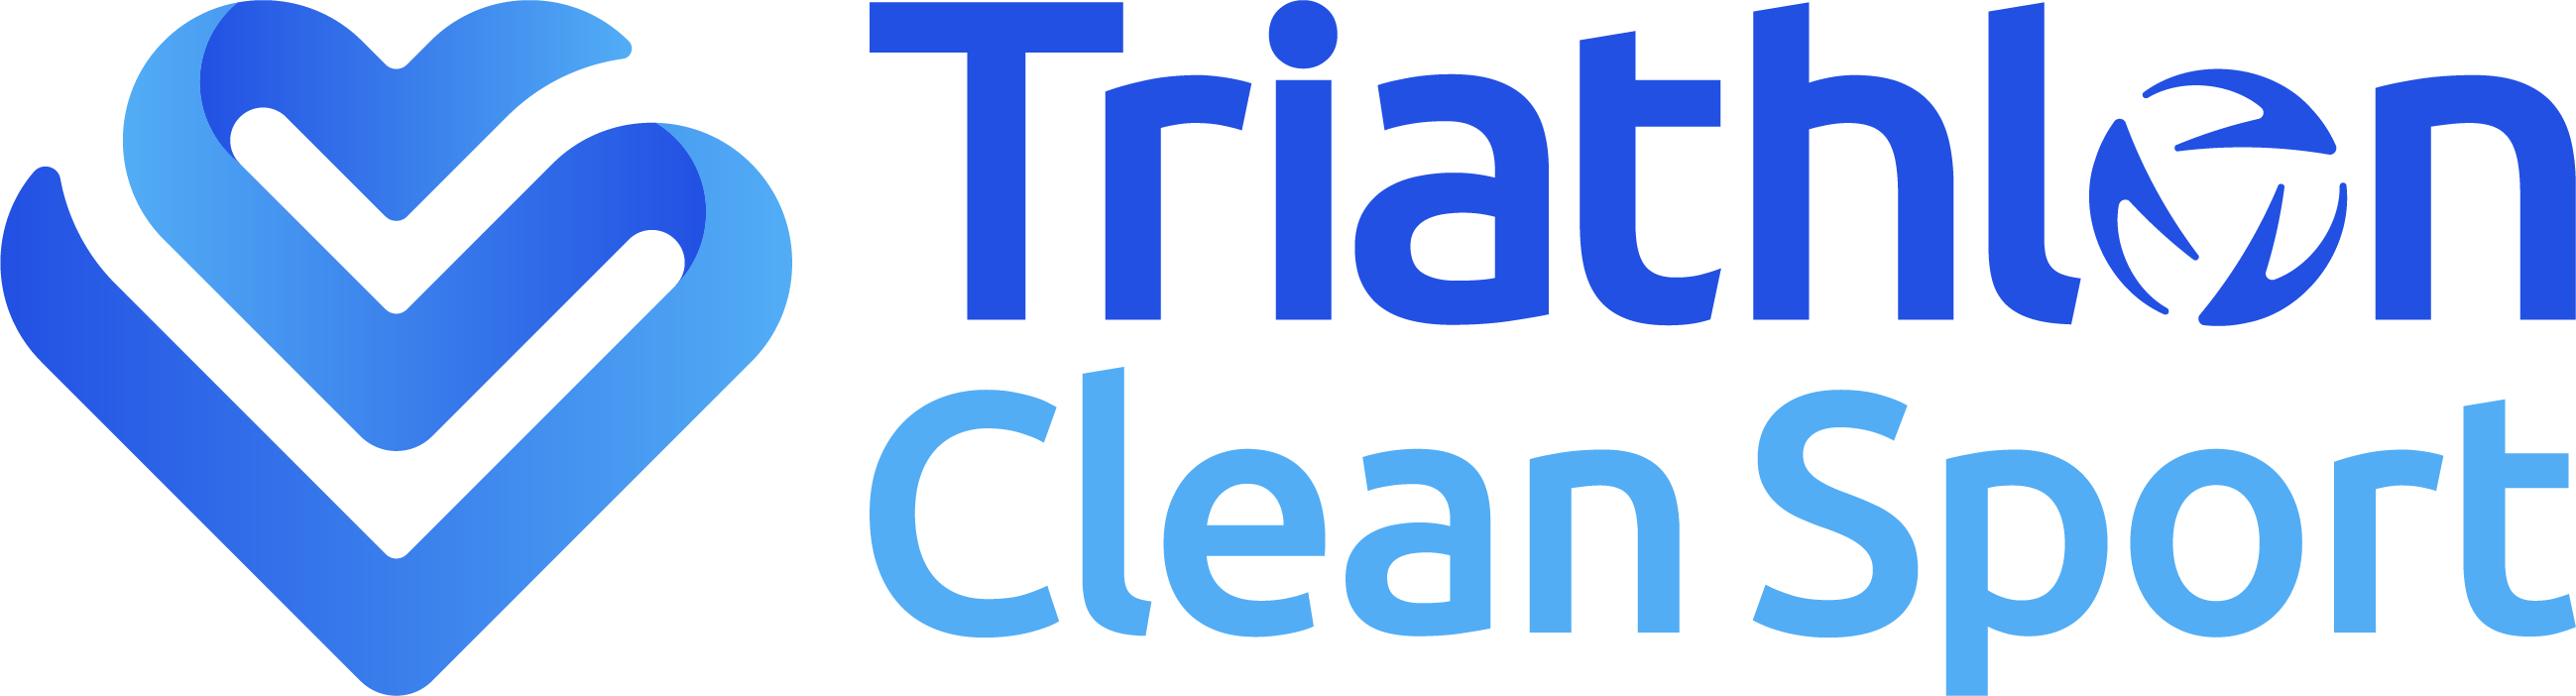 Clean Sport Logo